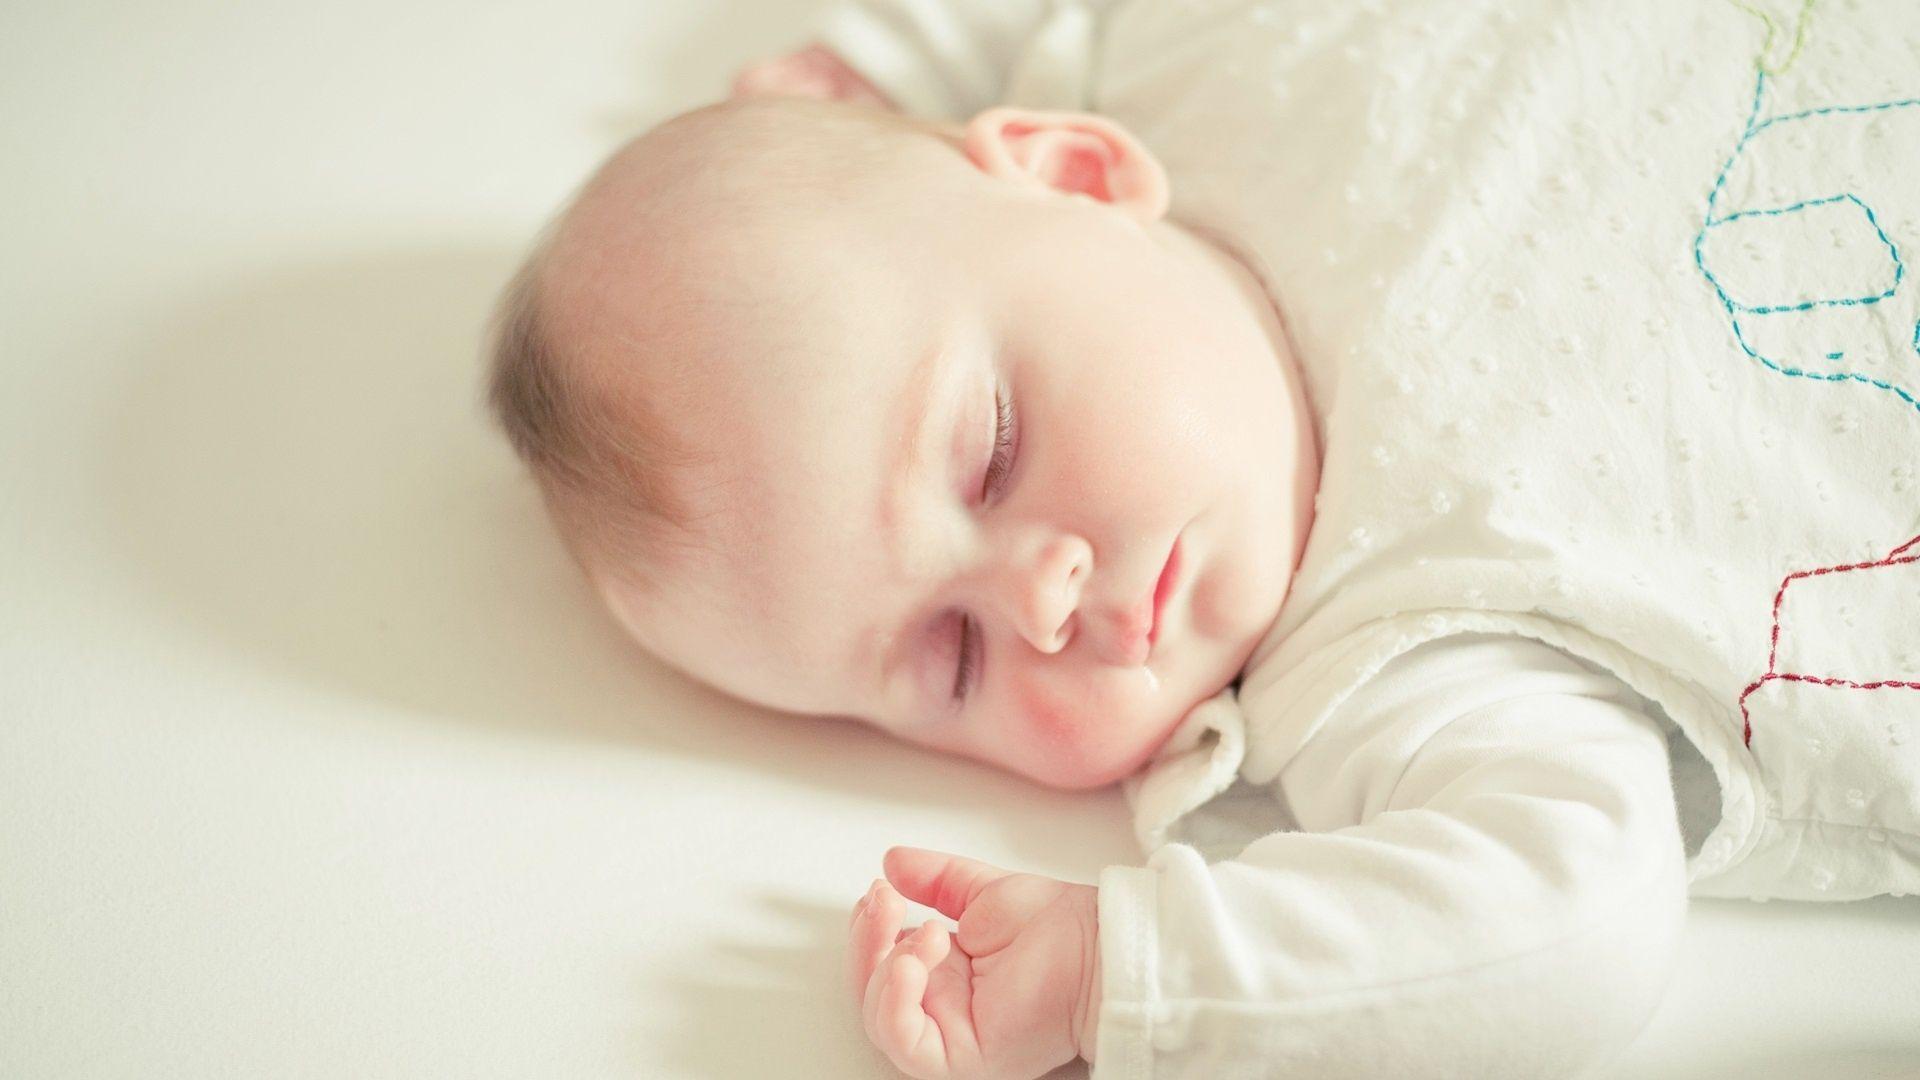 hd wallpaper cute sleeping baby. Baby. Baby wallpaper, Cute baby